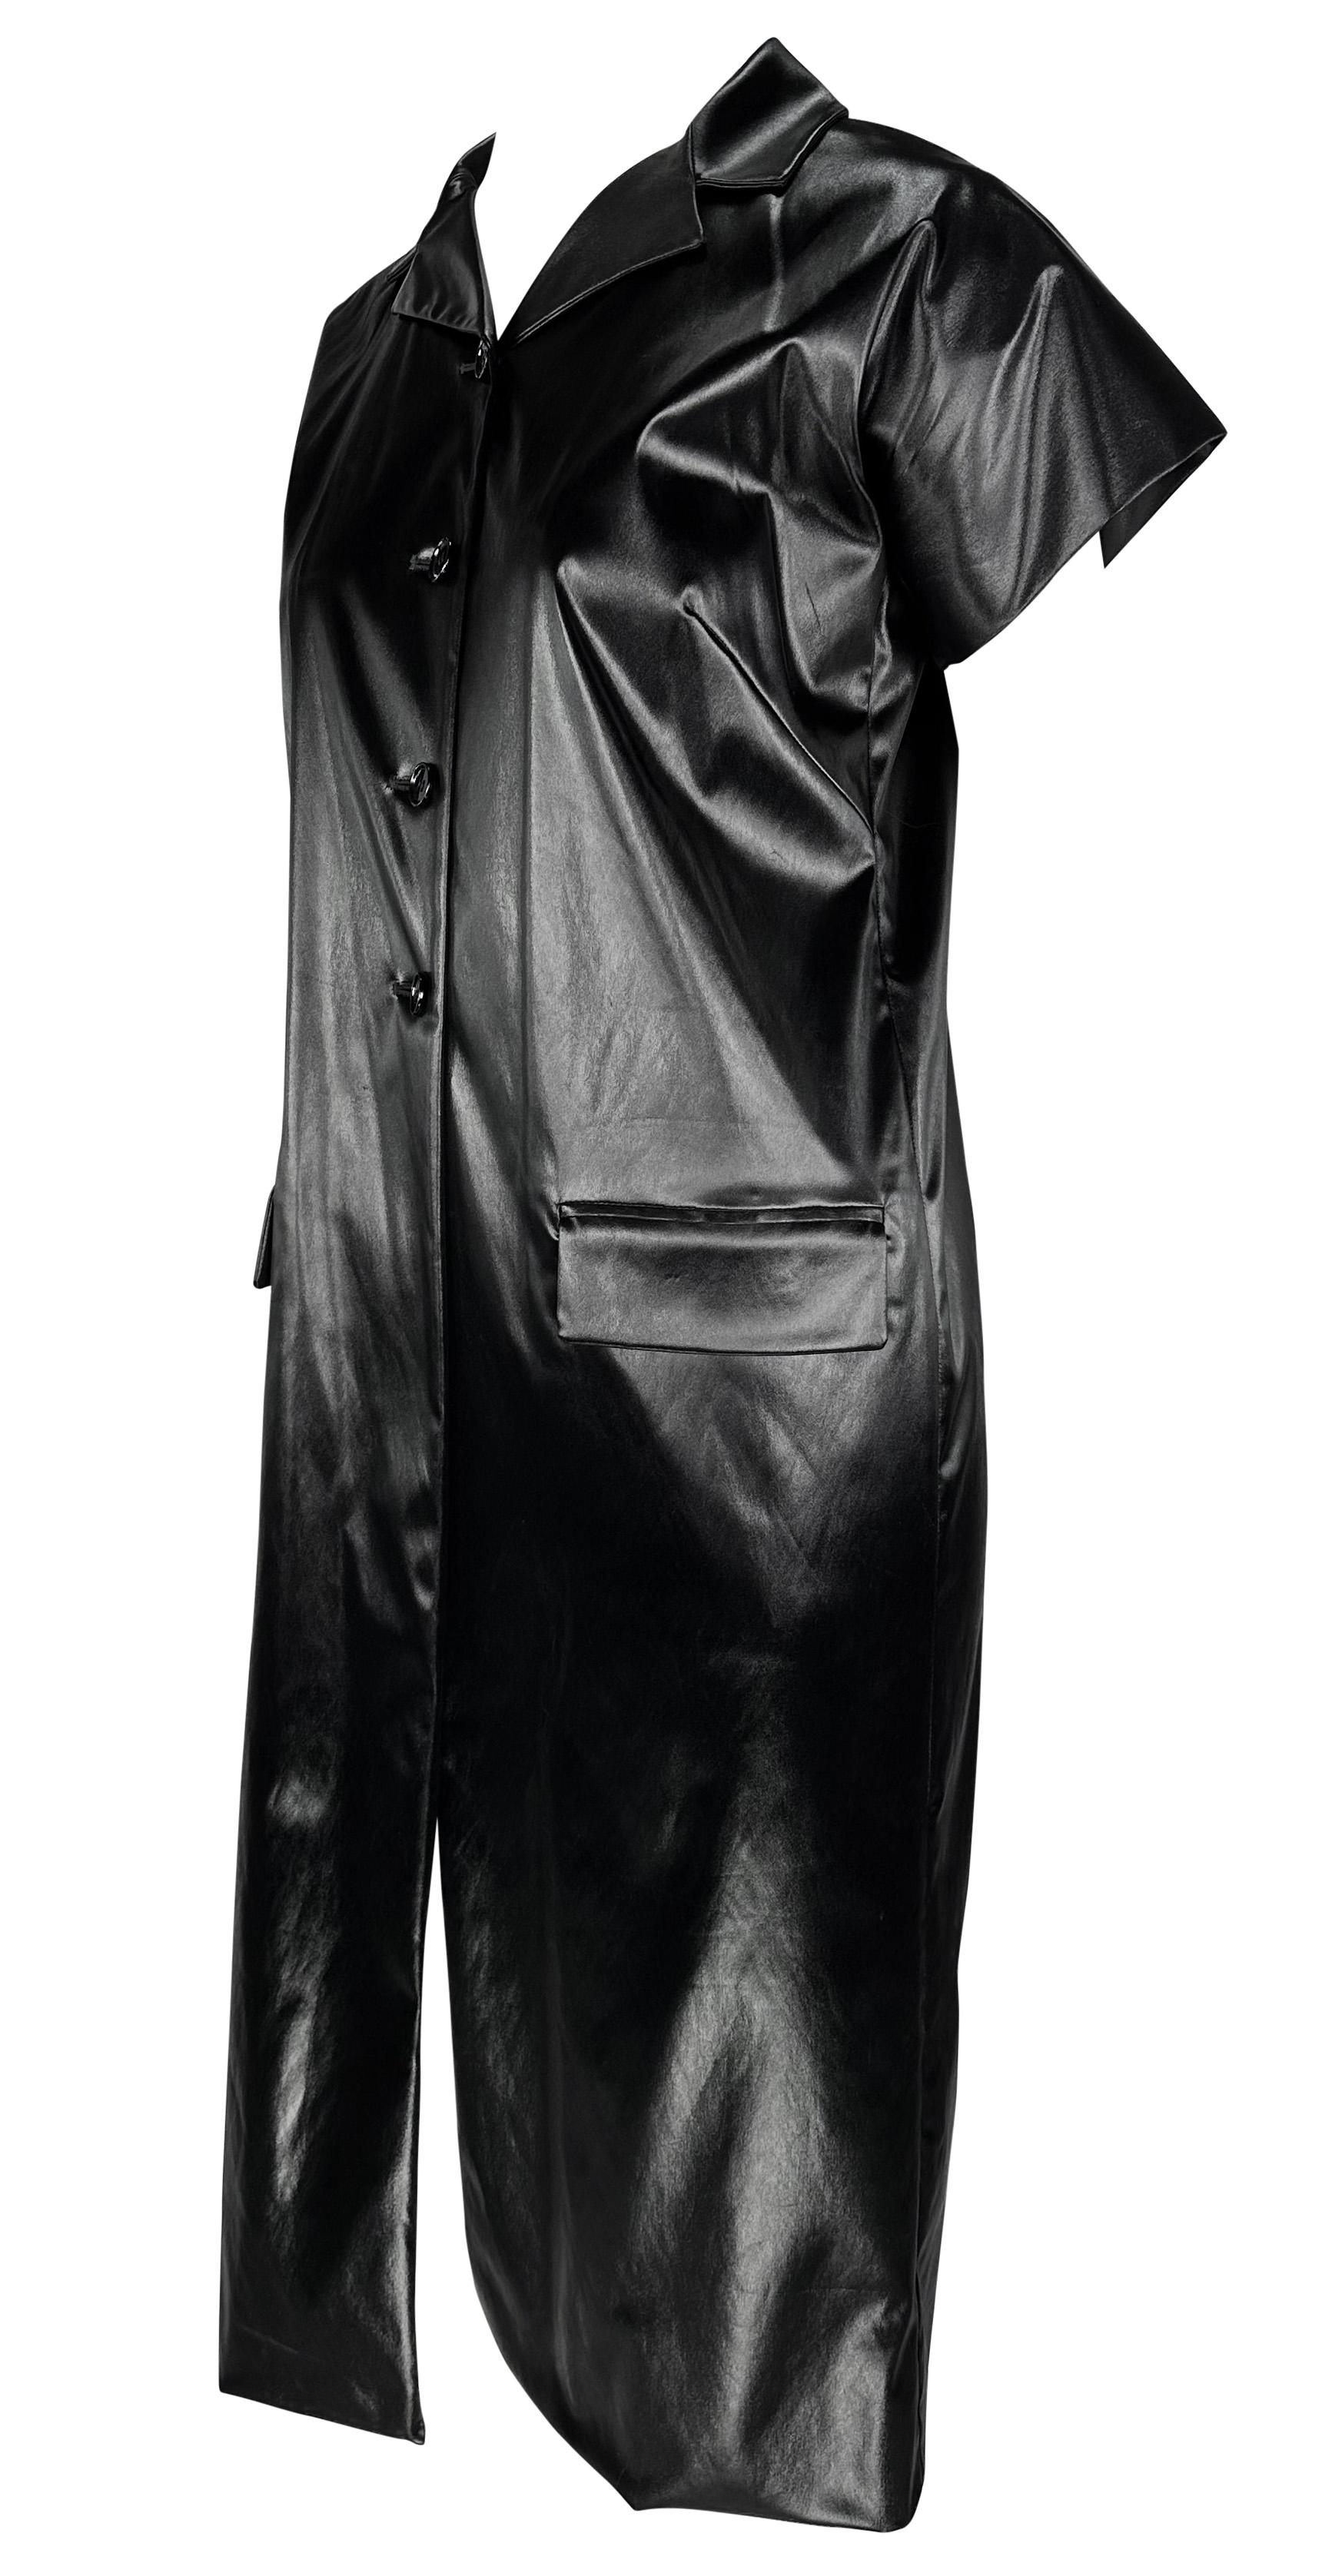 Women's S/S 1999 Dolce & Gabbana Runway Wet Look Stretch Black Coat Dress Short Sleeve For Sale